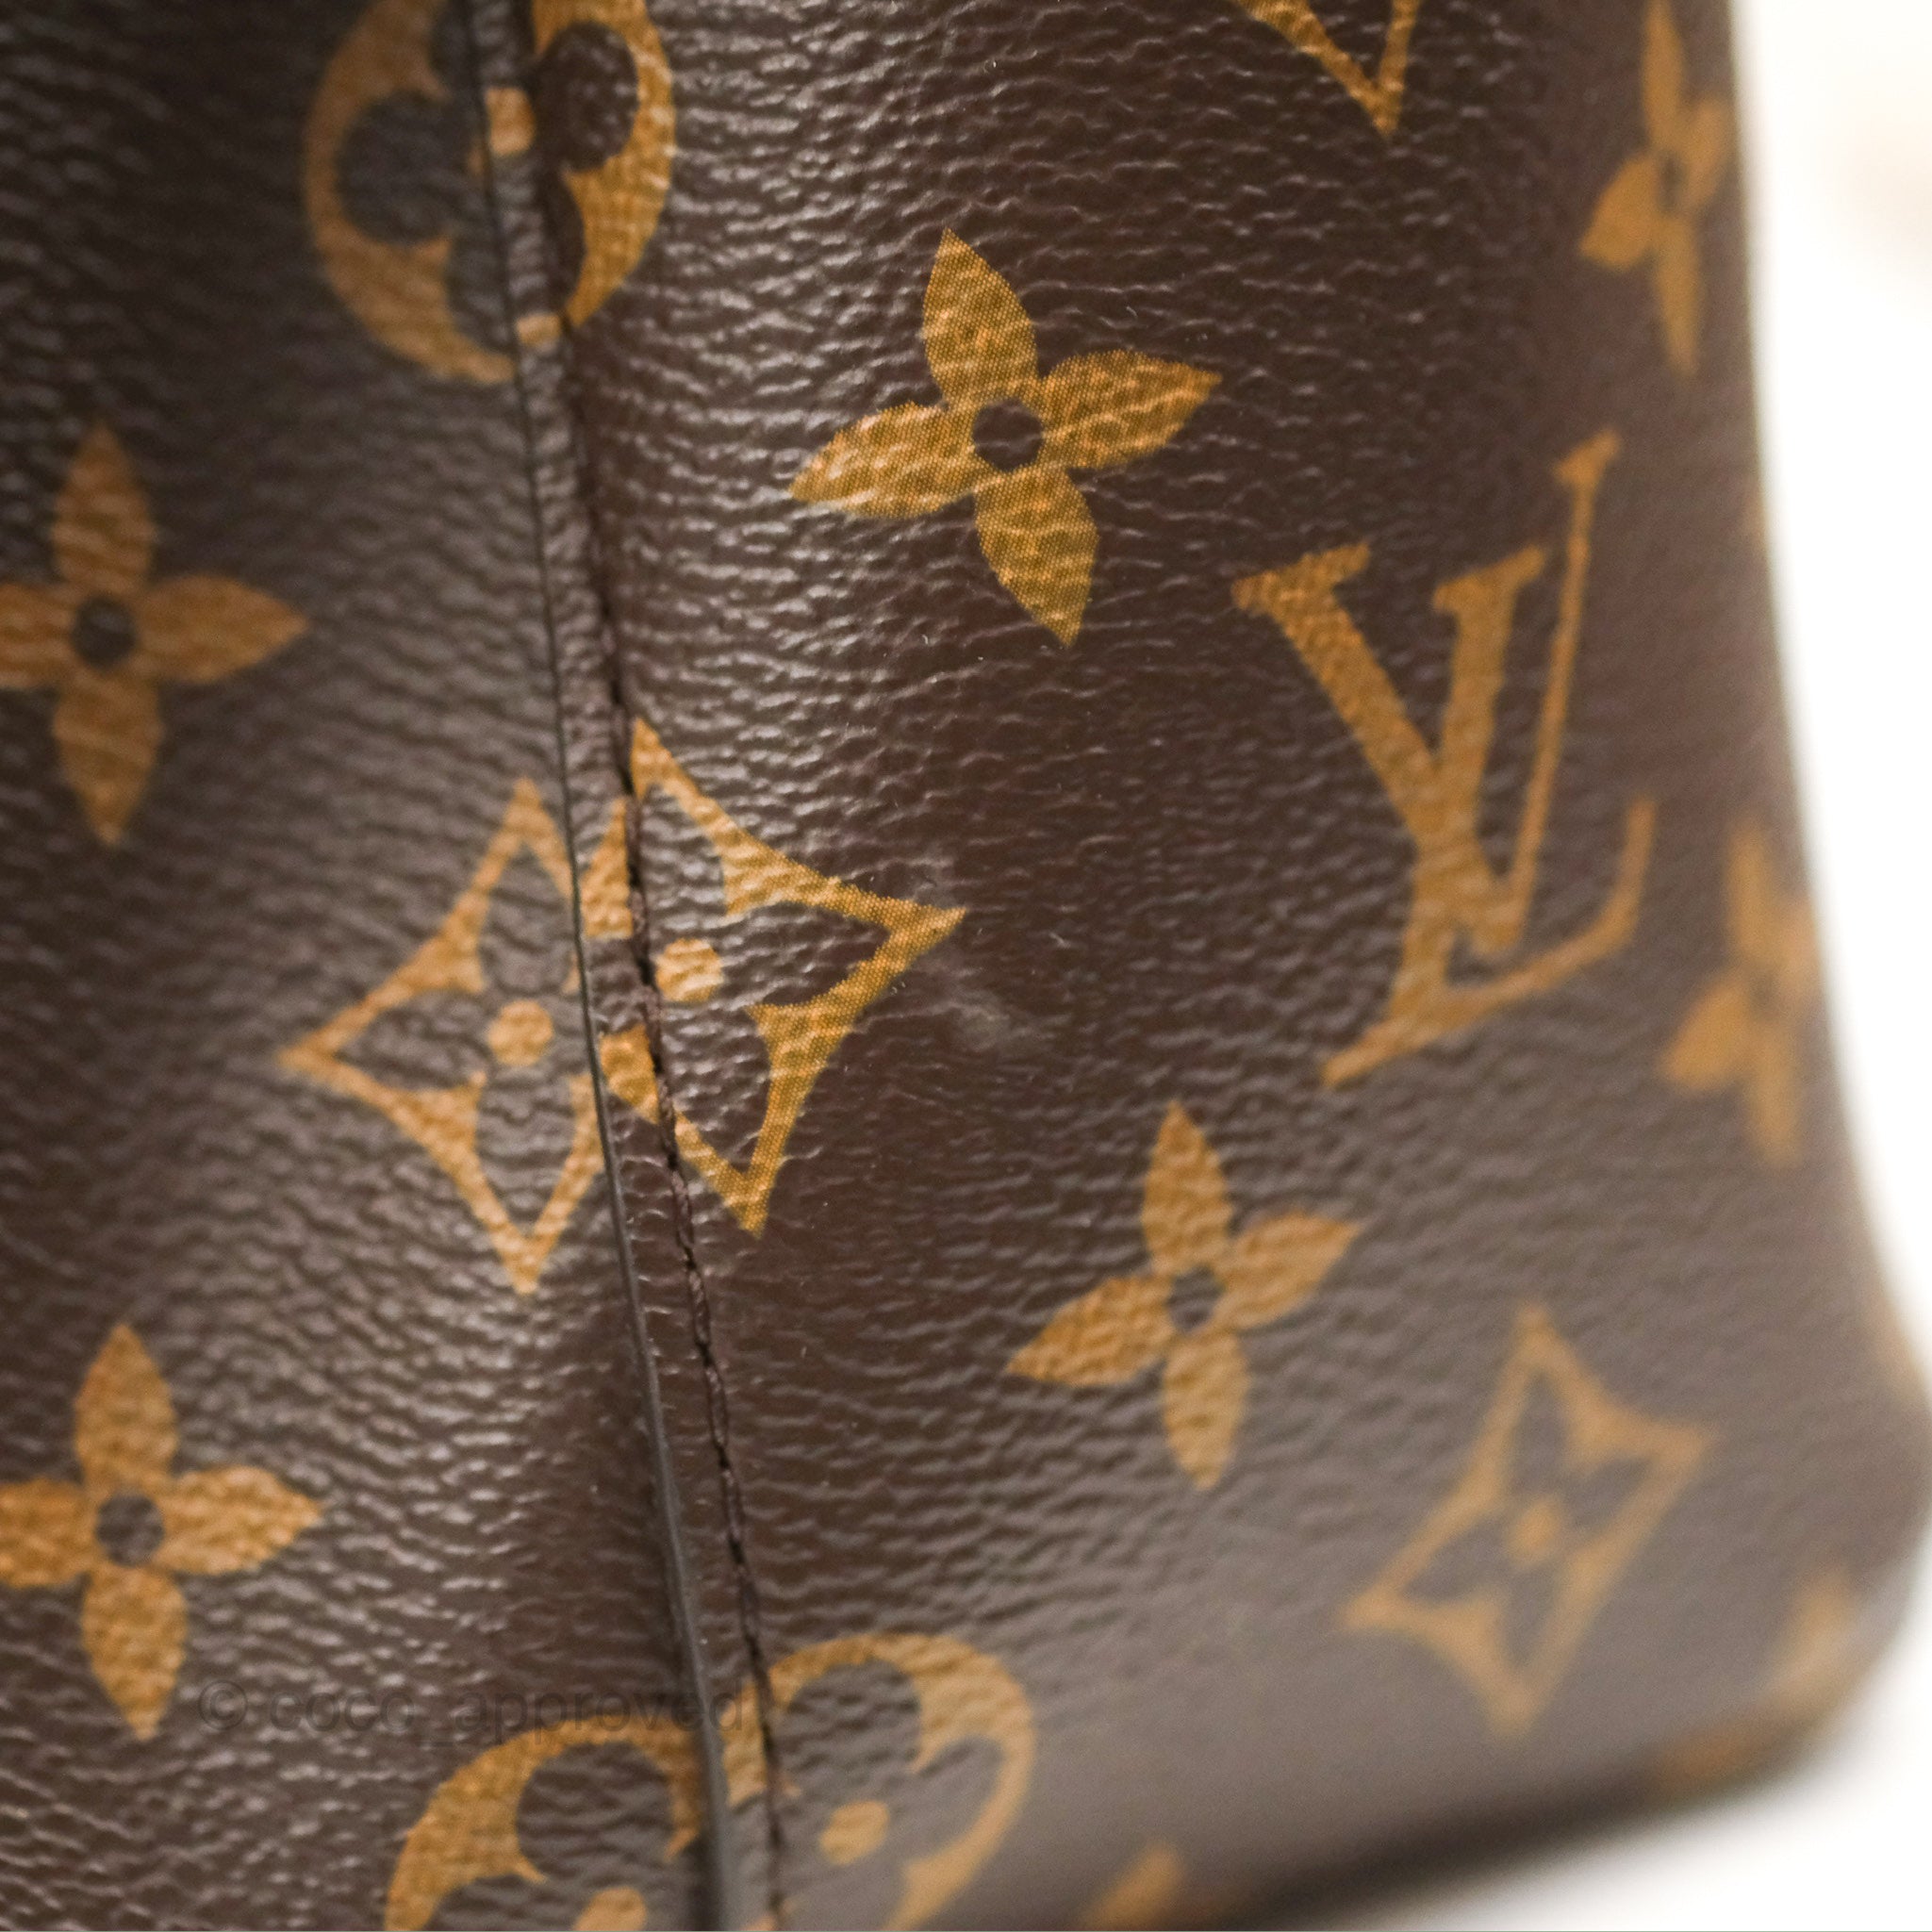 Louis Vuitton Neonoe Bucket Bag MM Monogram Canvas Rose Poudre – Coco  Approved Studio